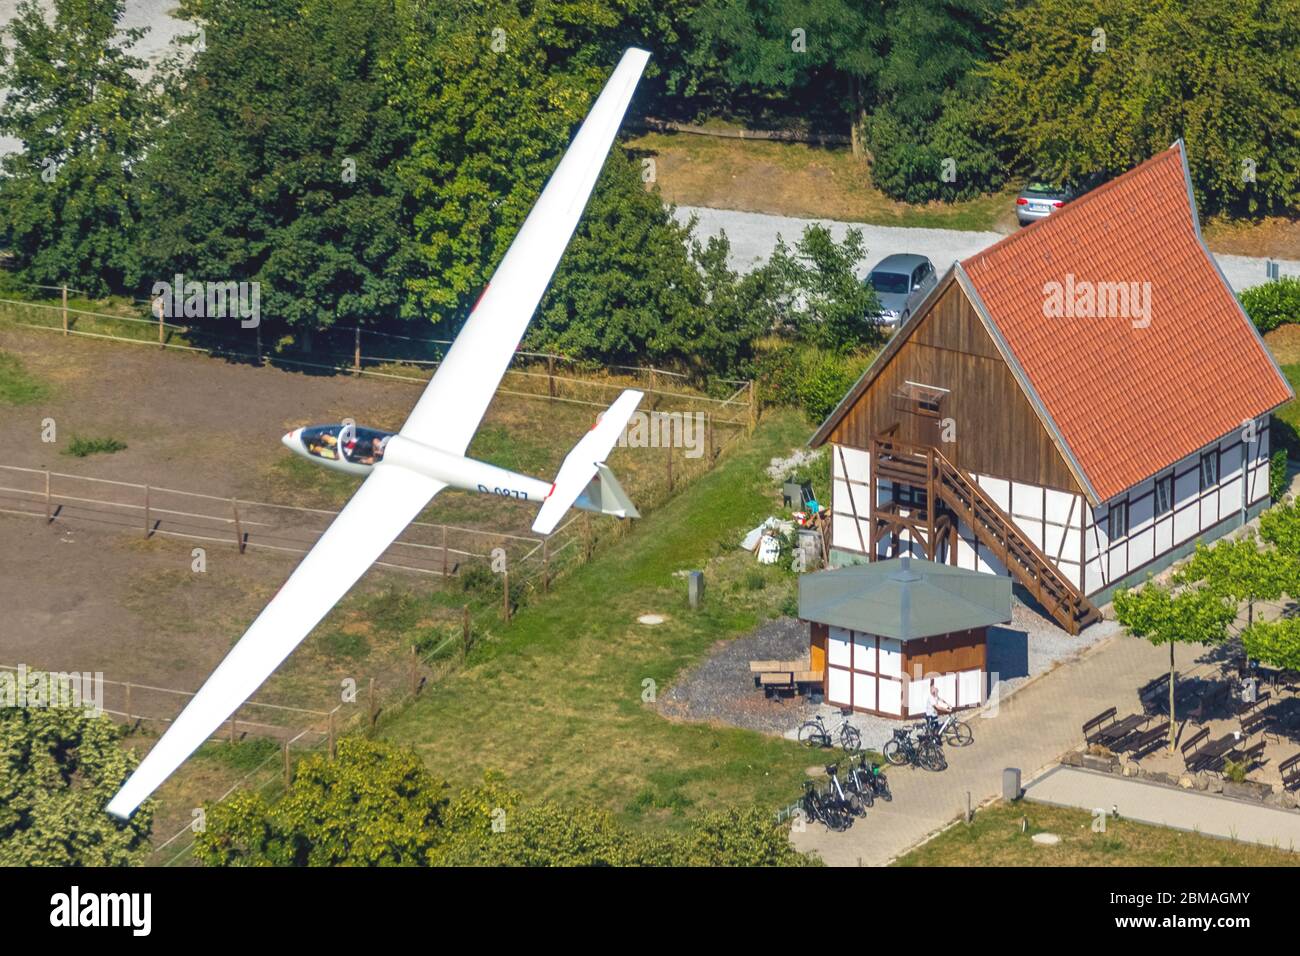 sailplane ASK21 in flight over restaurant Restaurant Altes Faehrhaus, training of landing, 04.08.2019, aerial view, Germany, North Rhine-Westphalia, Ruhr Area, Hamm Stock Photo